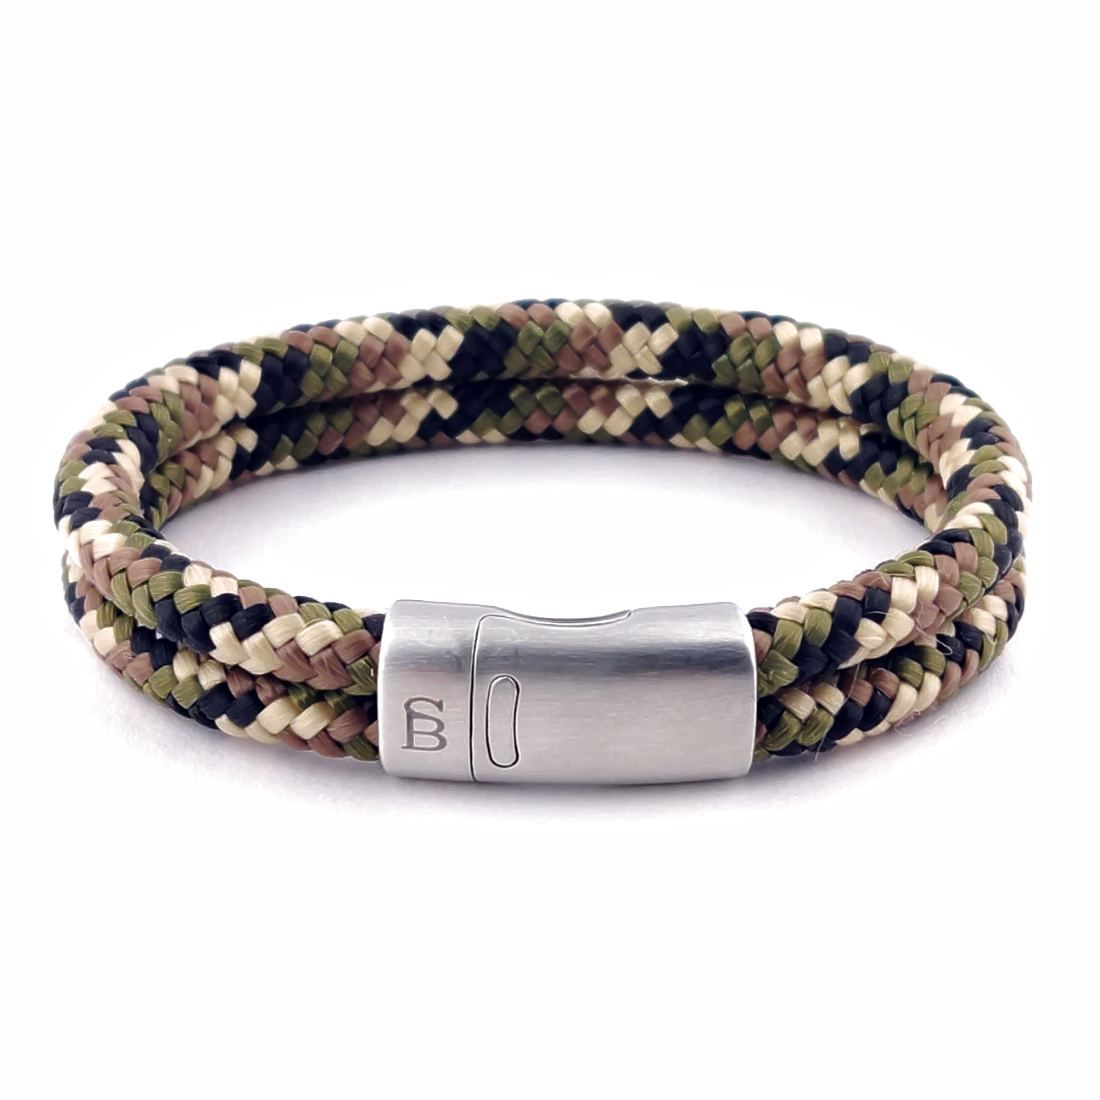 Buy Dare Camouflage Print Leather Trend Bracelet at Amazonin